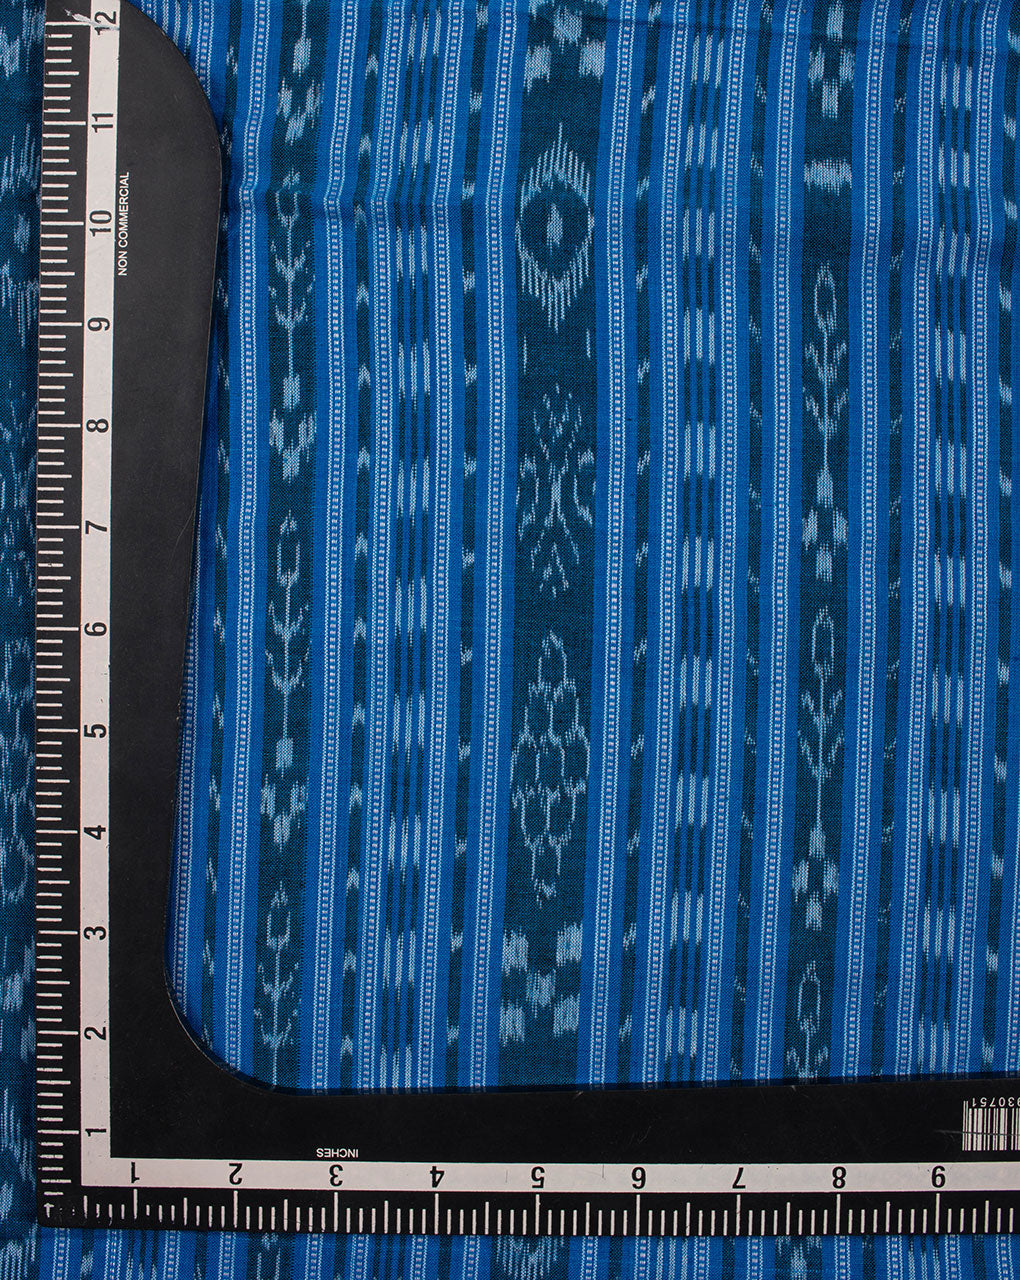 Turquoise Stripes Woven Sambalpuri Ikat Cotton Fabric - Fabriclore.com